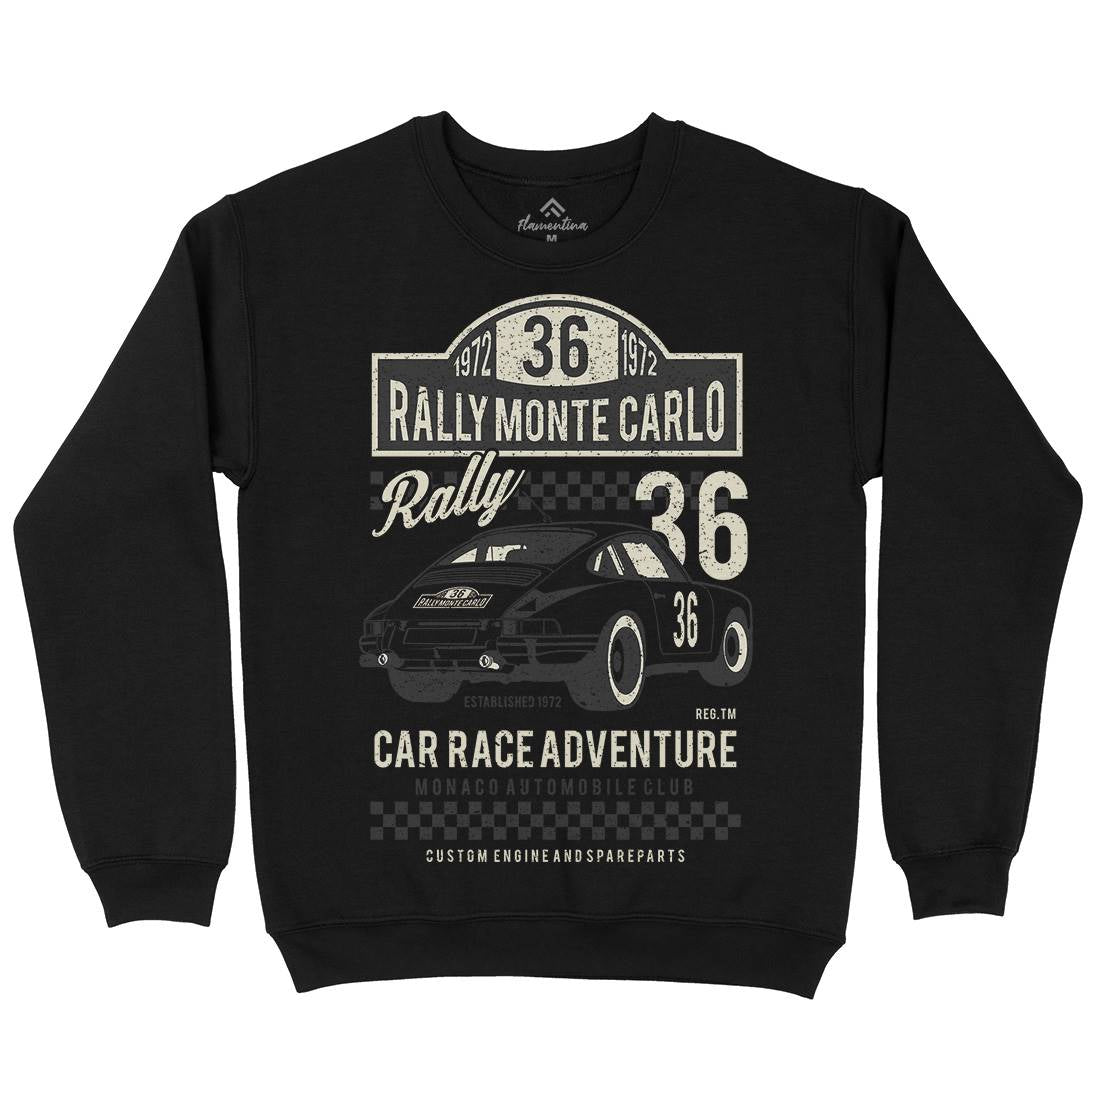 Rally Kids Crew Neck Sweatshirt Cars A737